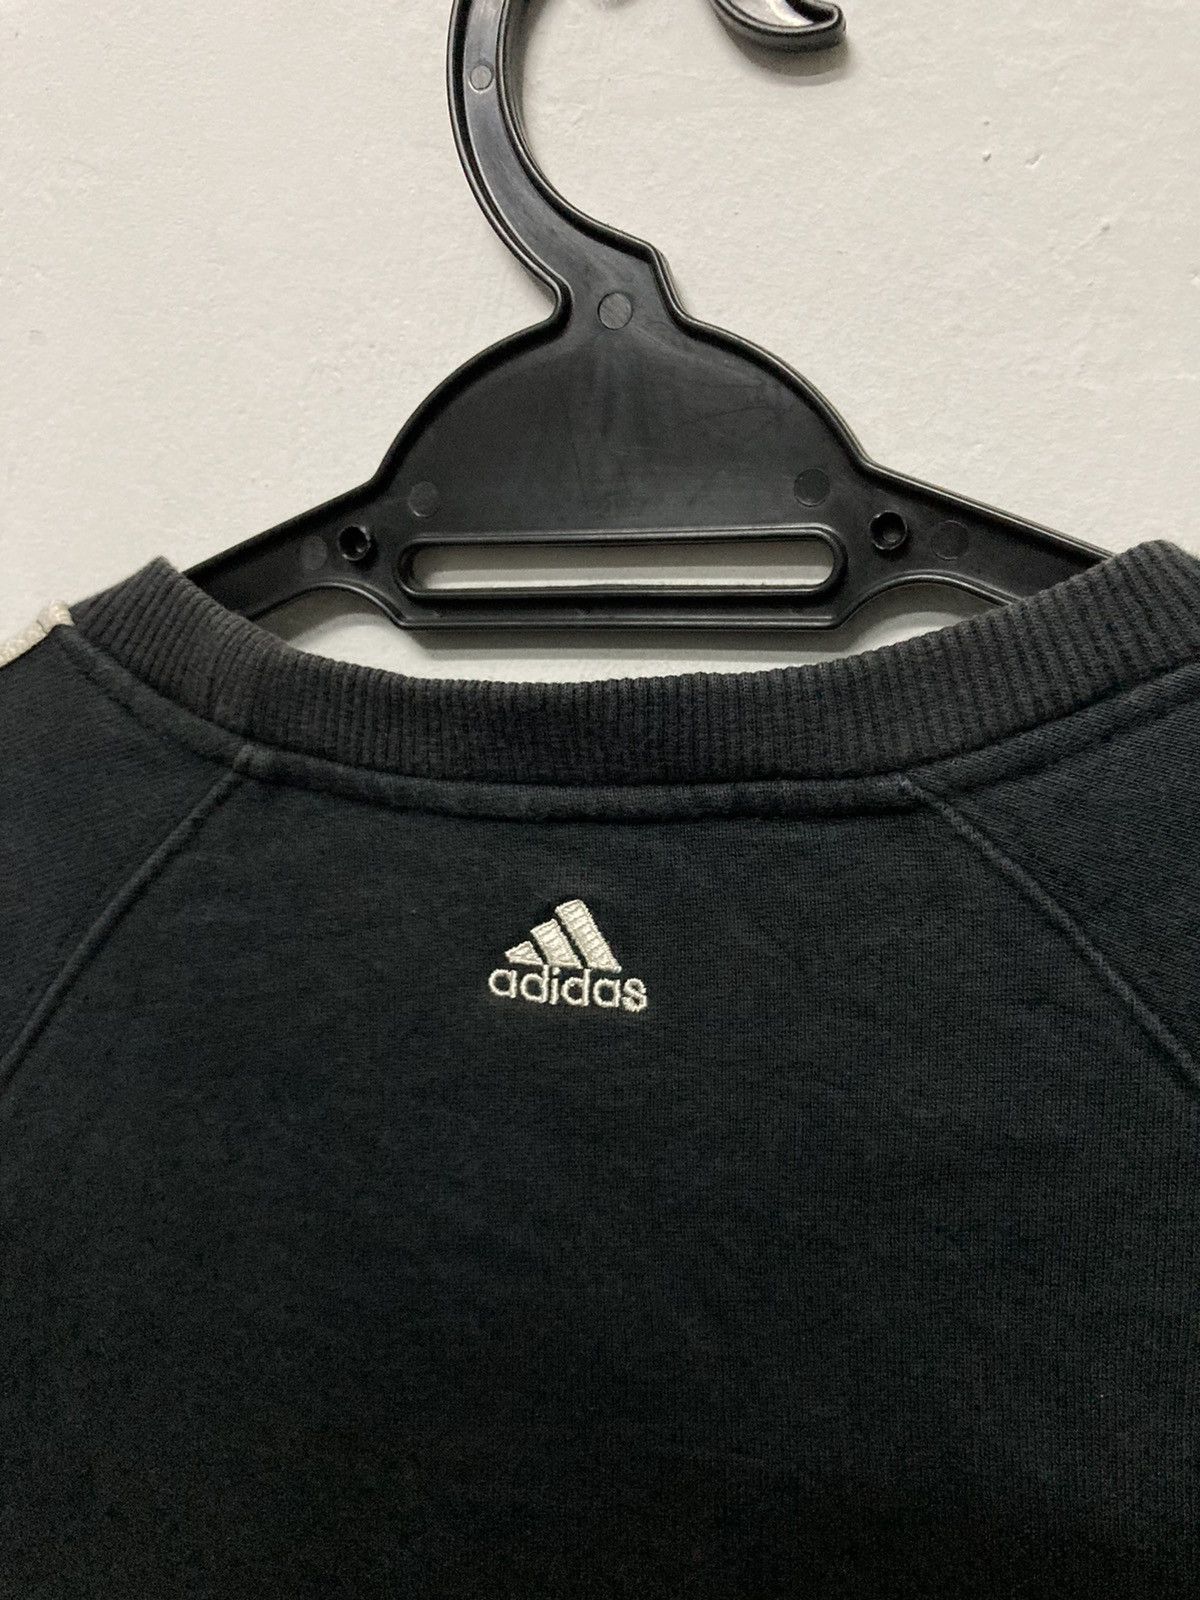 Adidas Adi Dassler Signature Crewneck Sweatshirt - 12